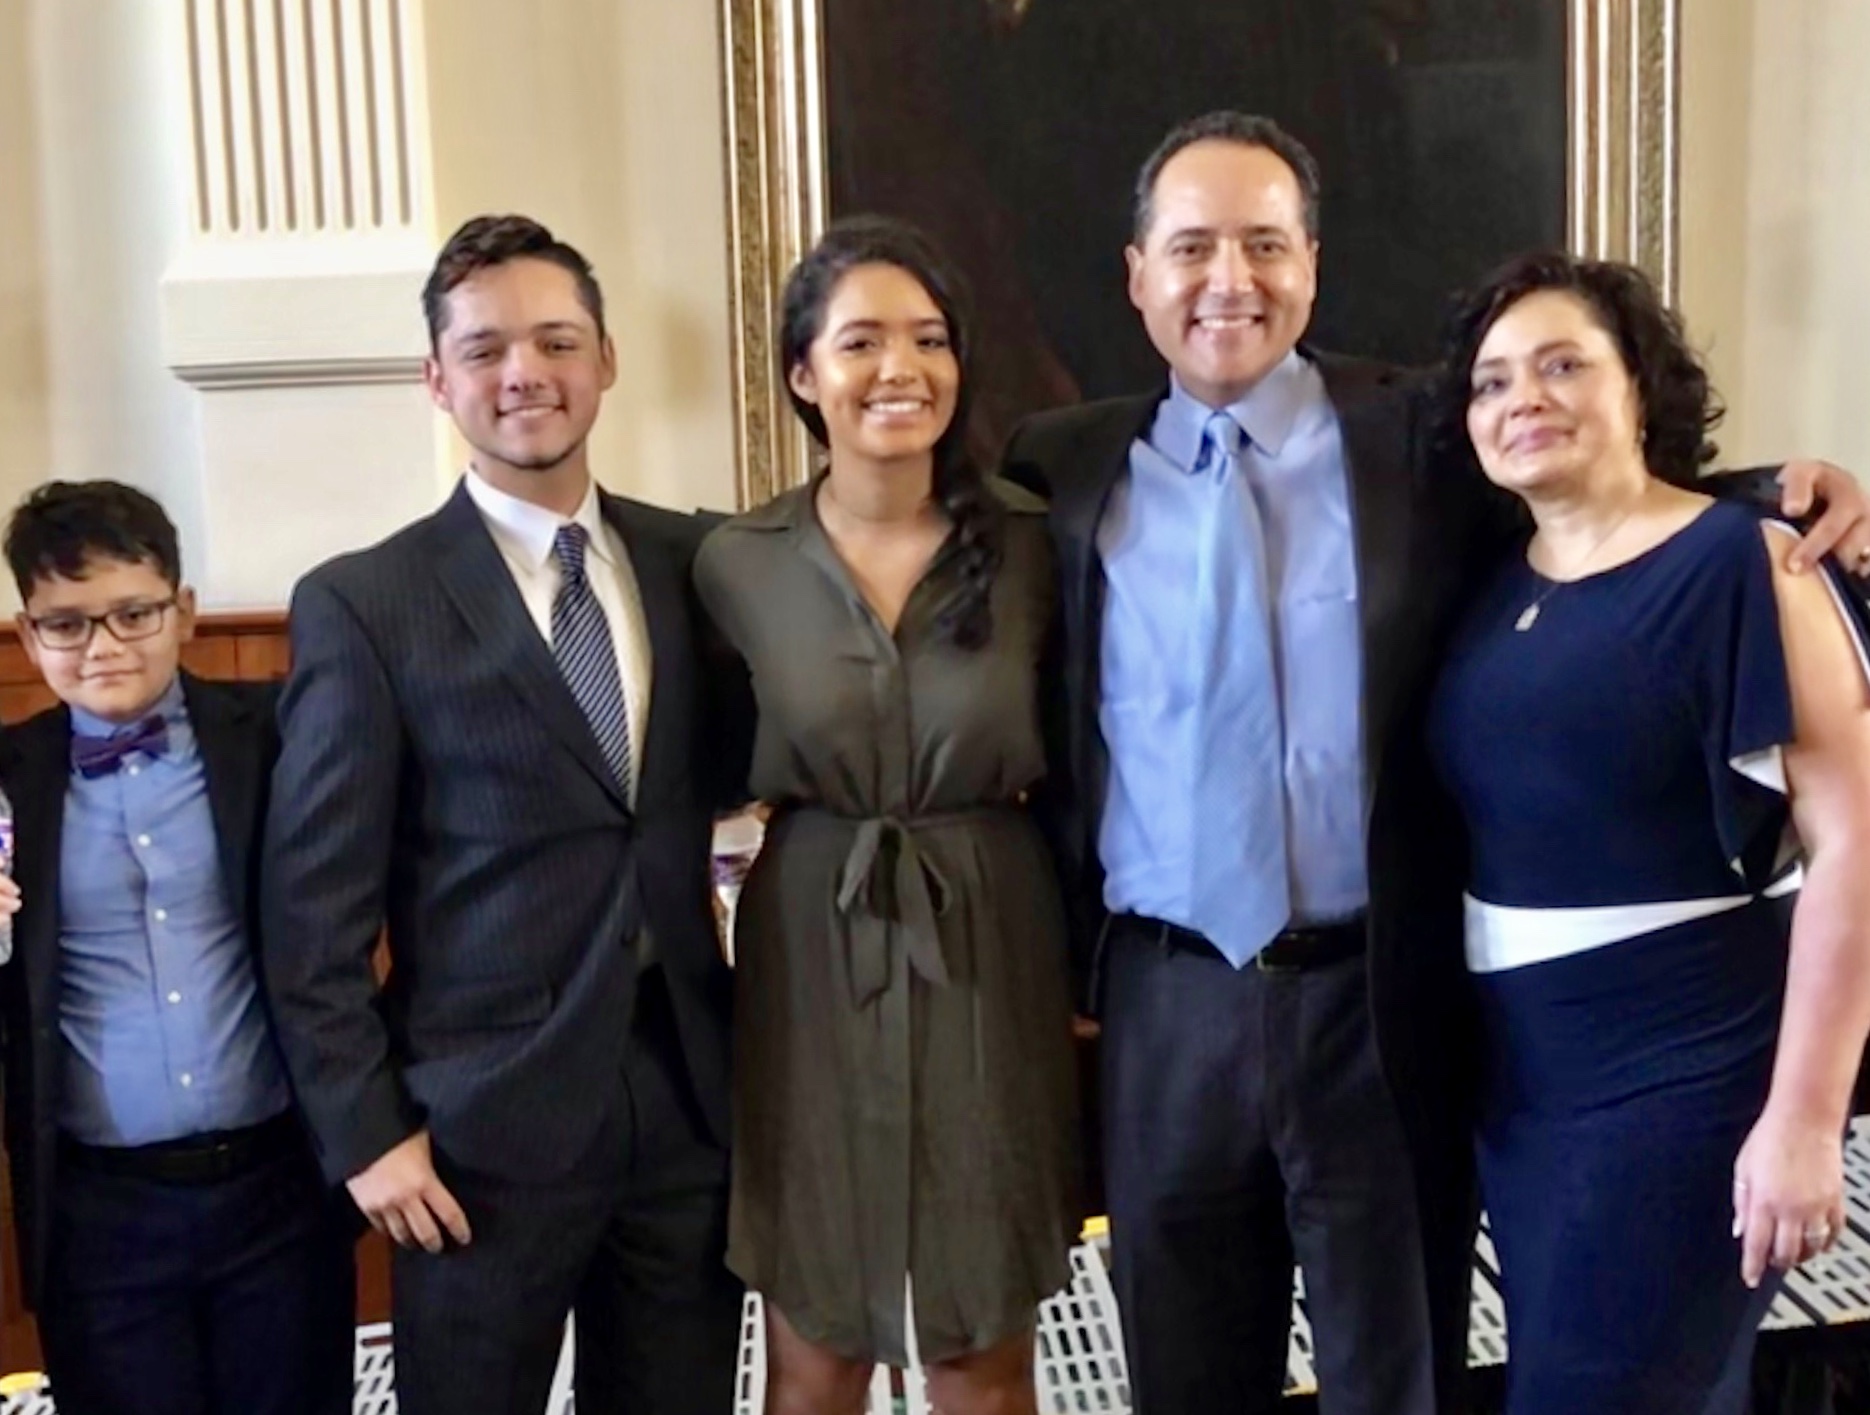 Senator Menendez Family Photo